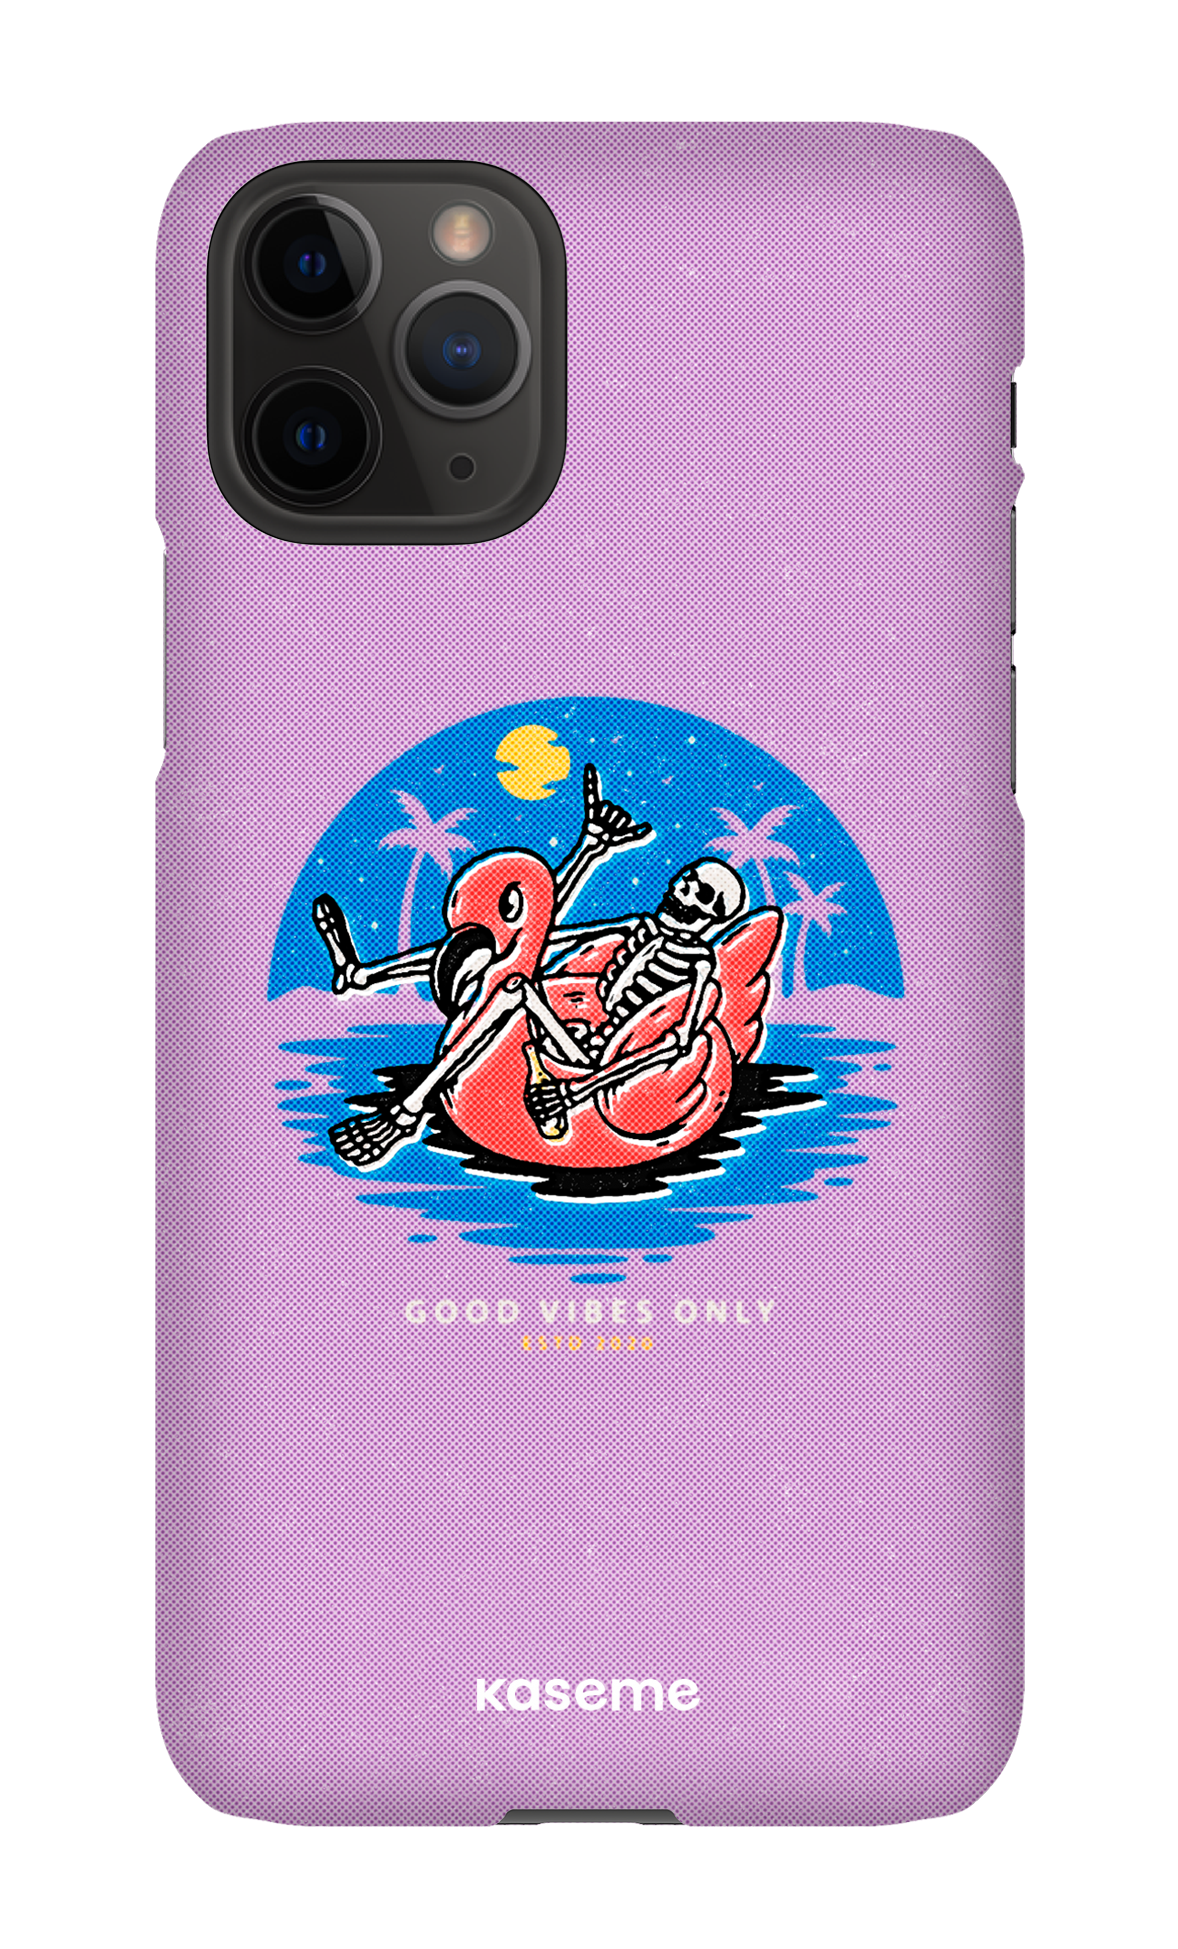 Seaside purple - iPhone 11 Pro